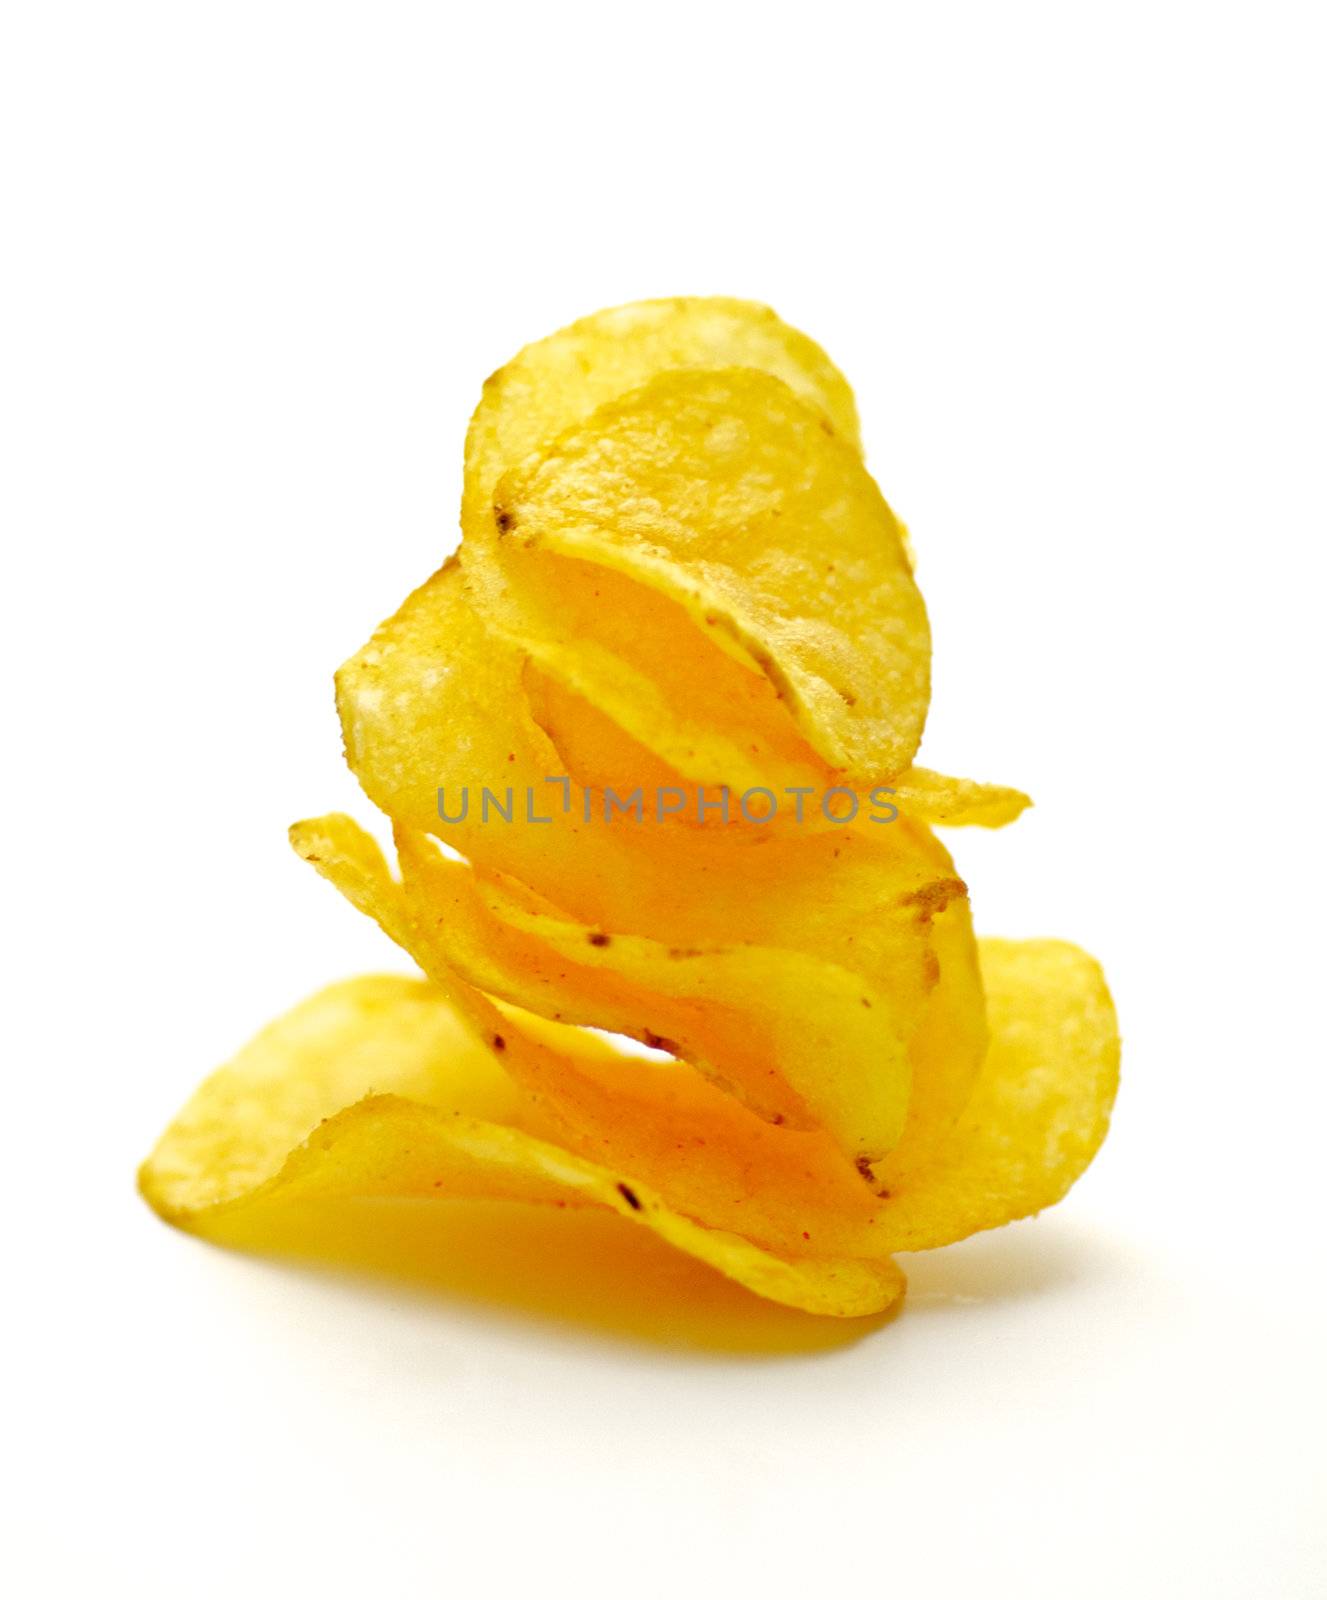 Potato Chips pyramid by zhekos